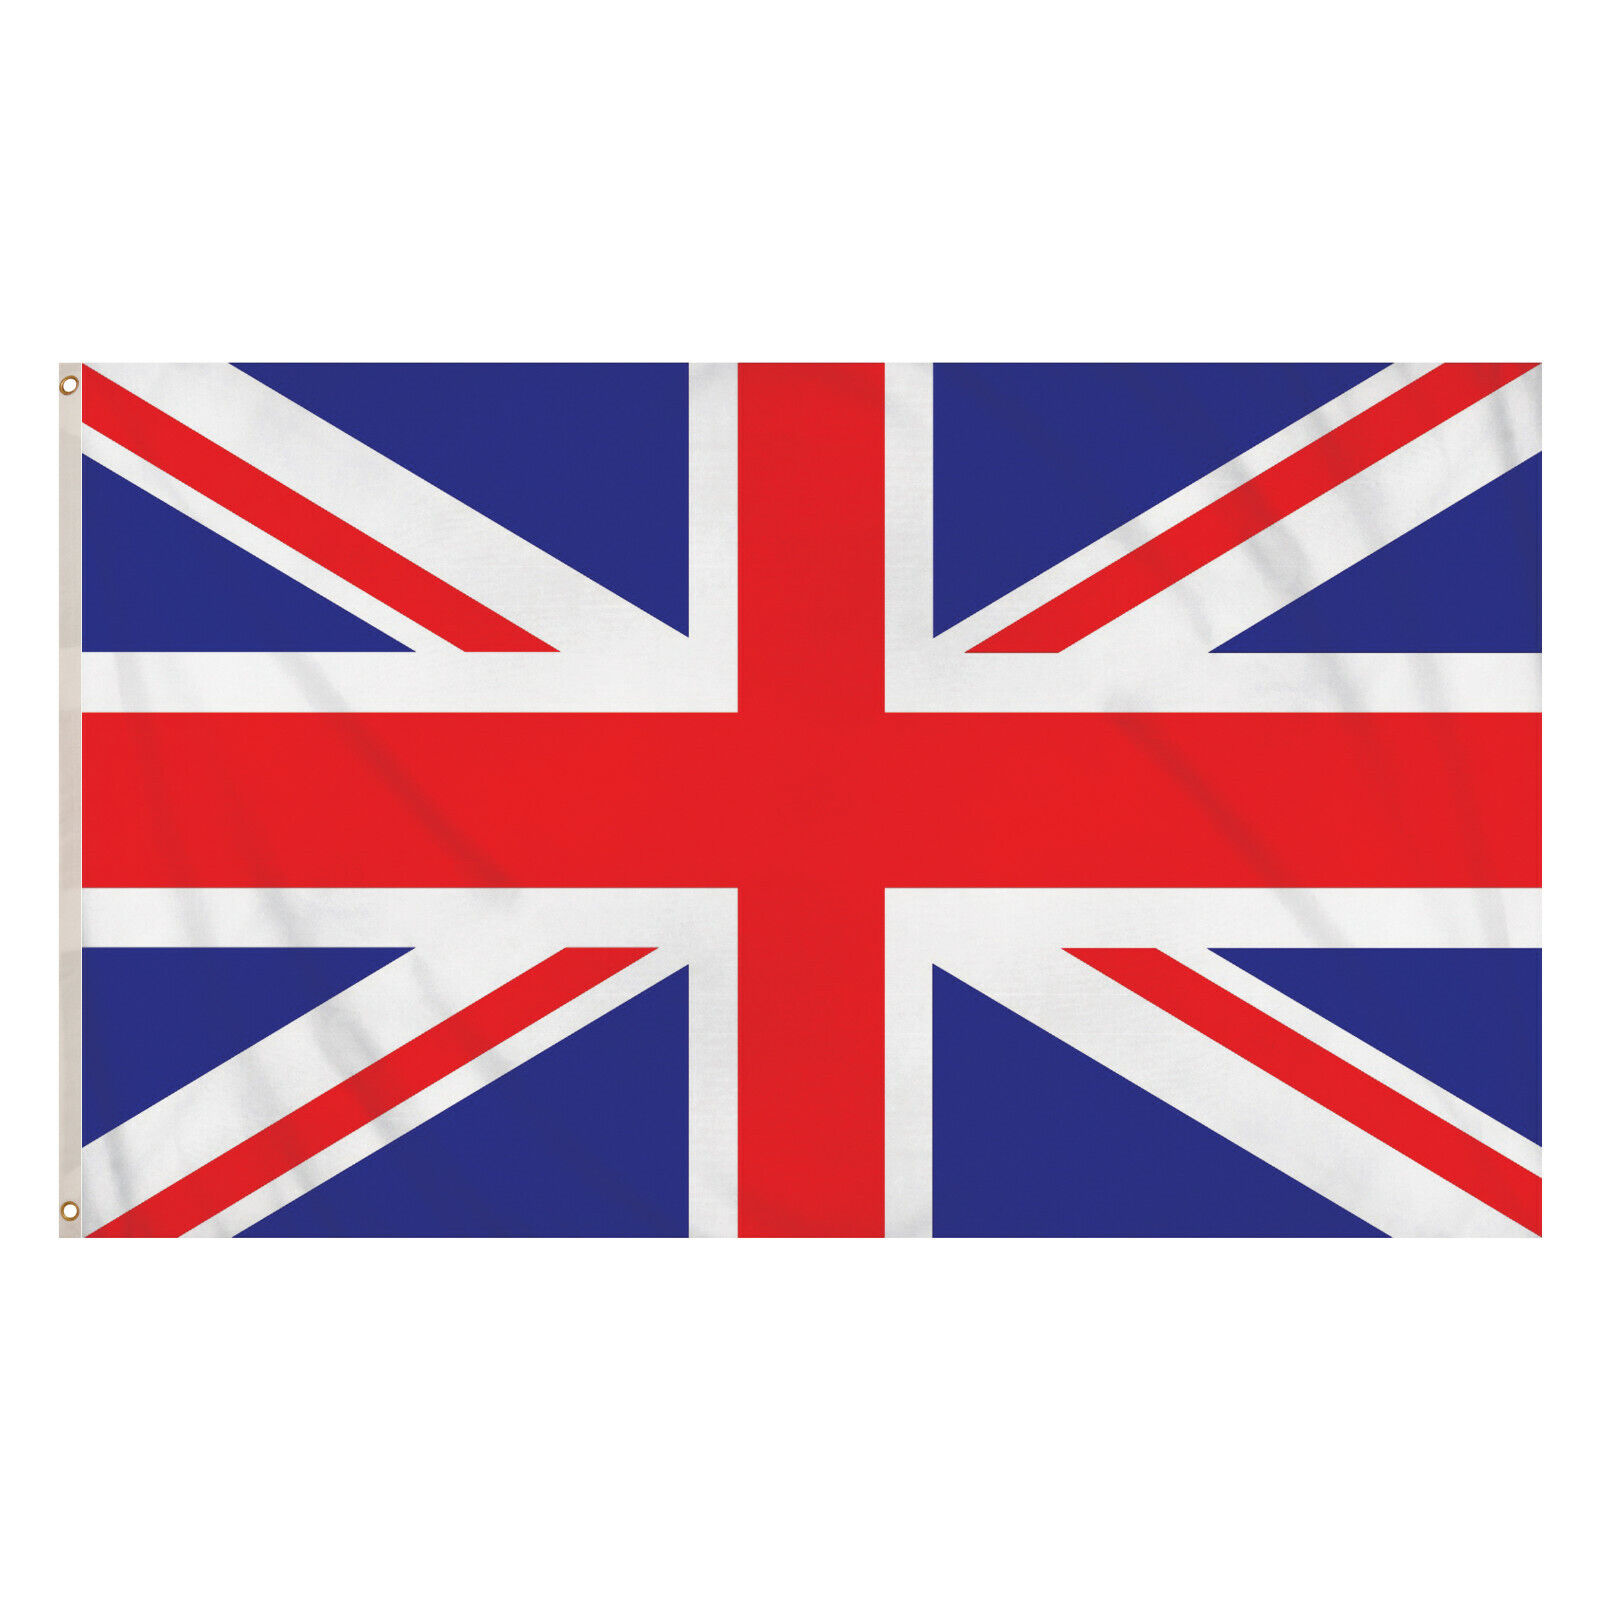 New Union Jack Flag Large Great Britain British Sport Olympics Jubilee 5 X 3FT